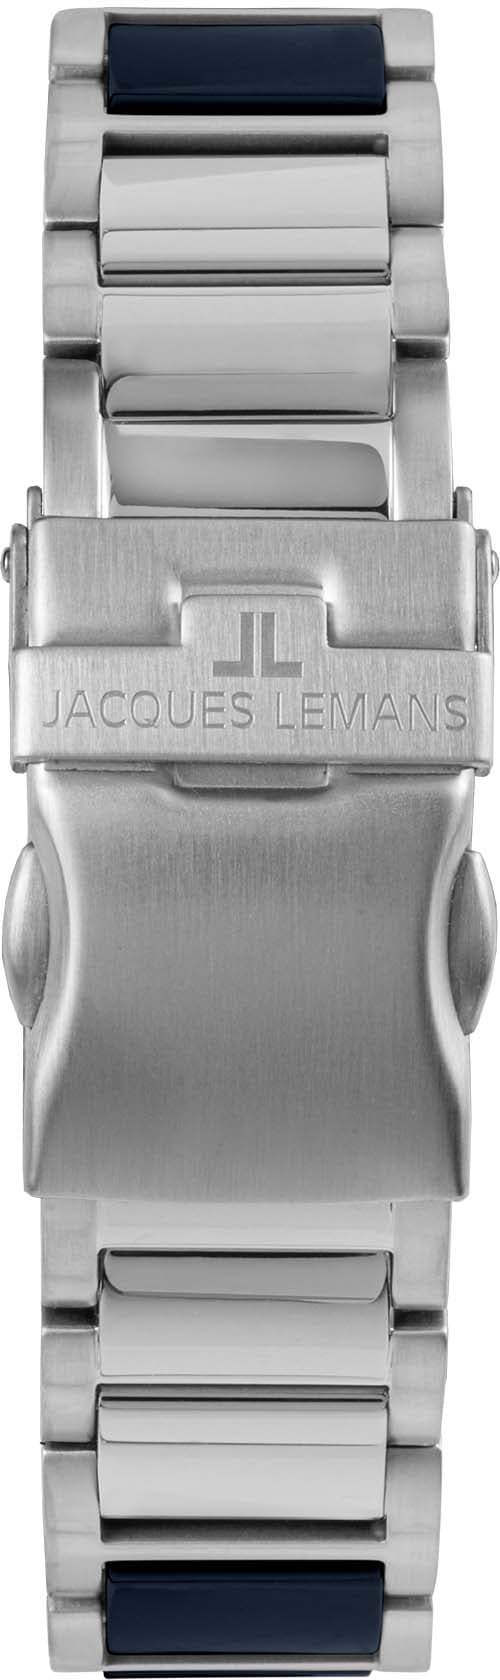 Jacques Lemans Keramikuhr »Liverpool, 42-10B« online OTTO bestellen bei